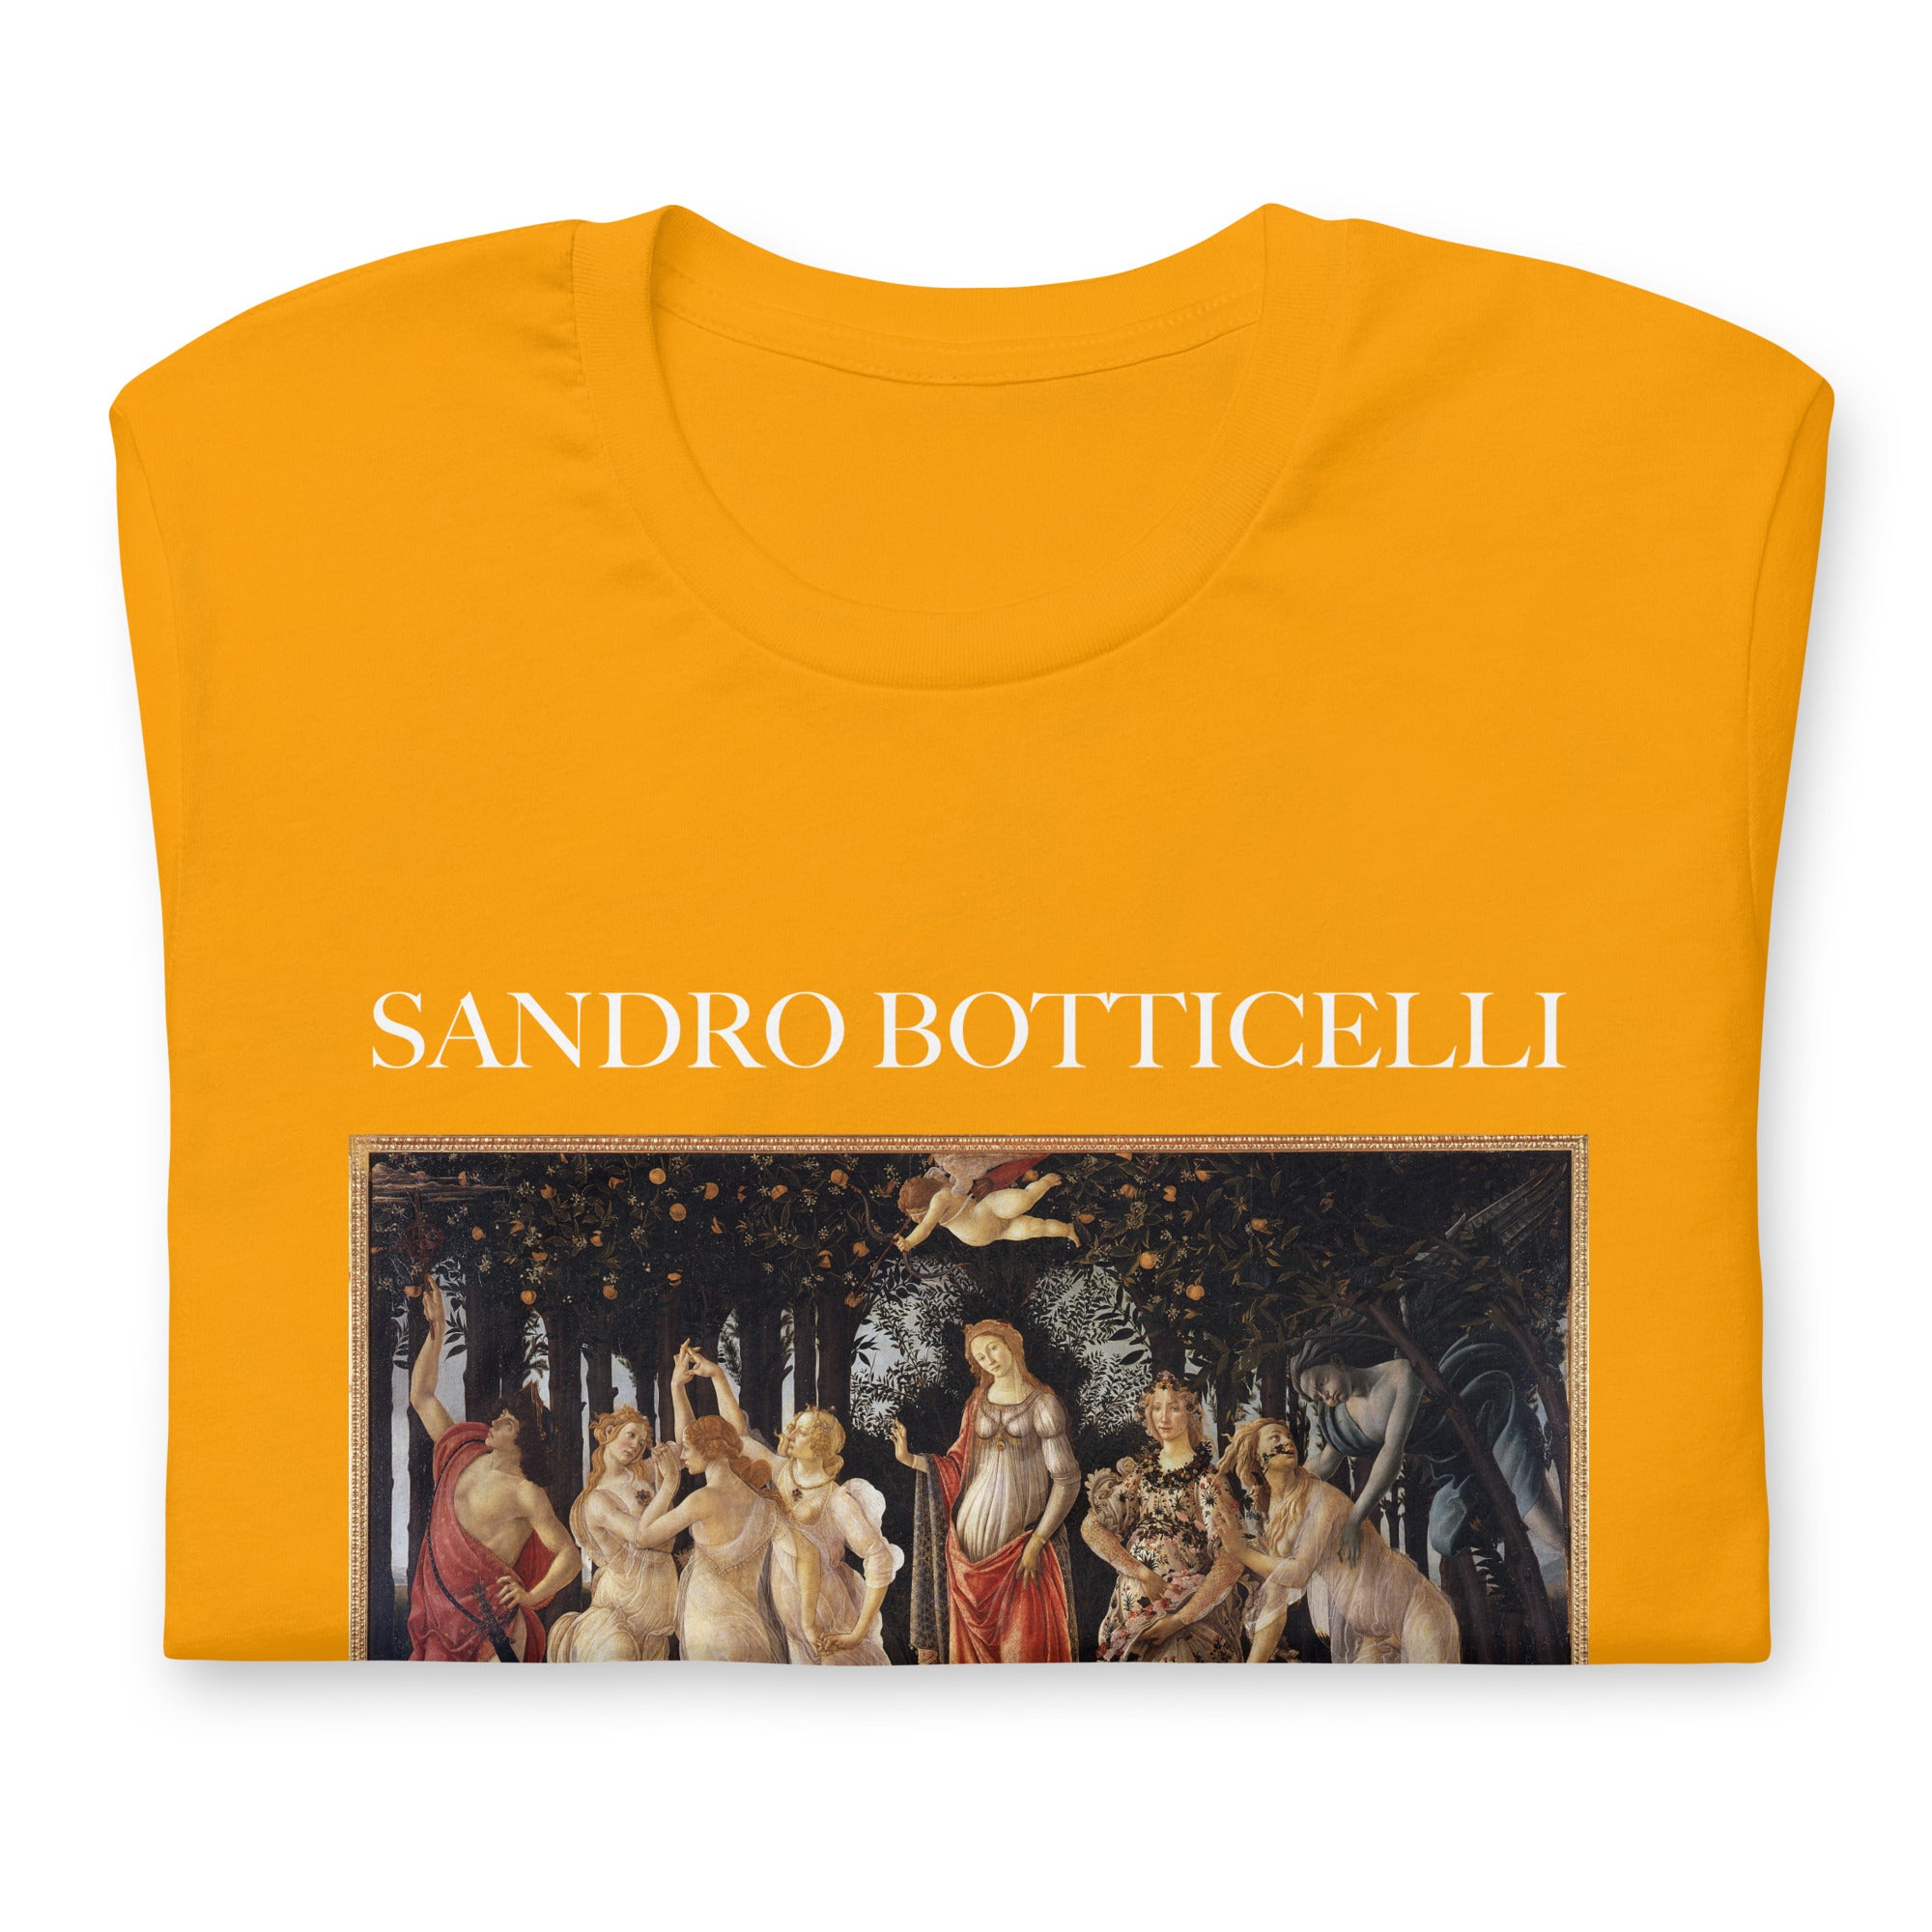 Sandro Botticelli 'Primavera' Famous Painting T-Shirt | Unisex Classic Art Tee